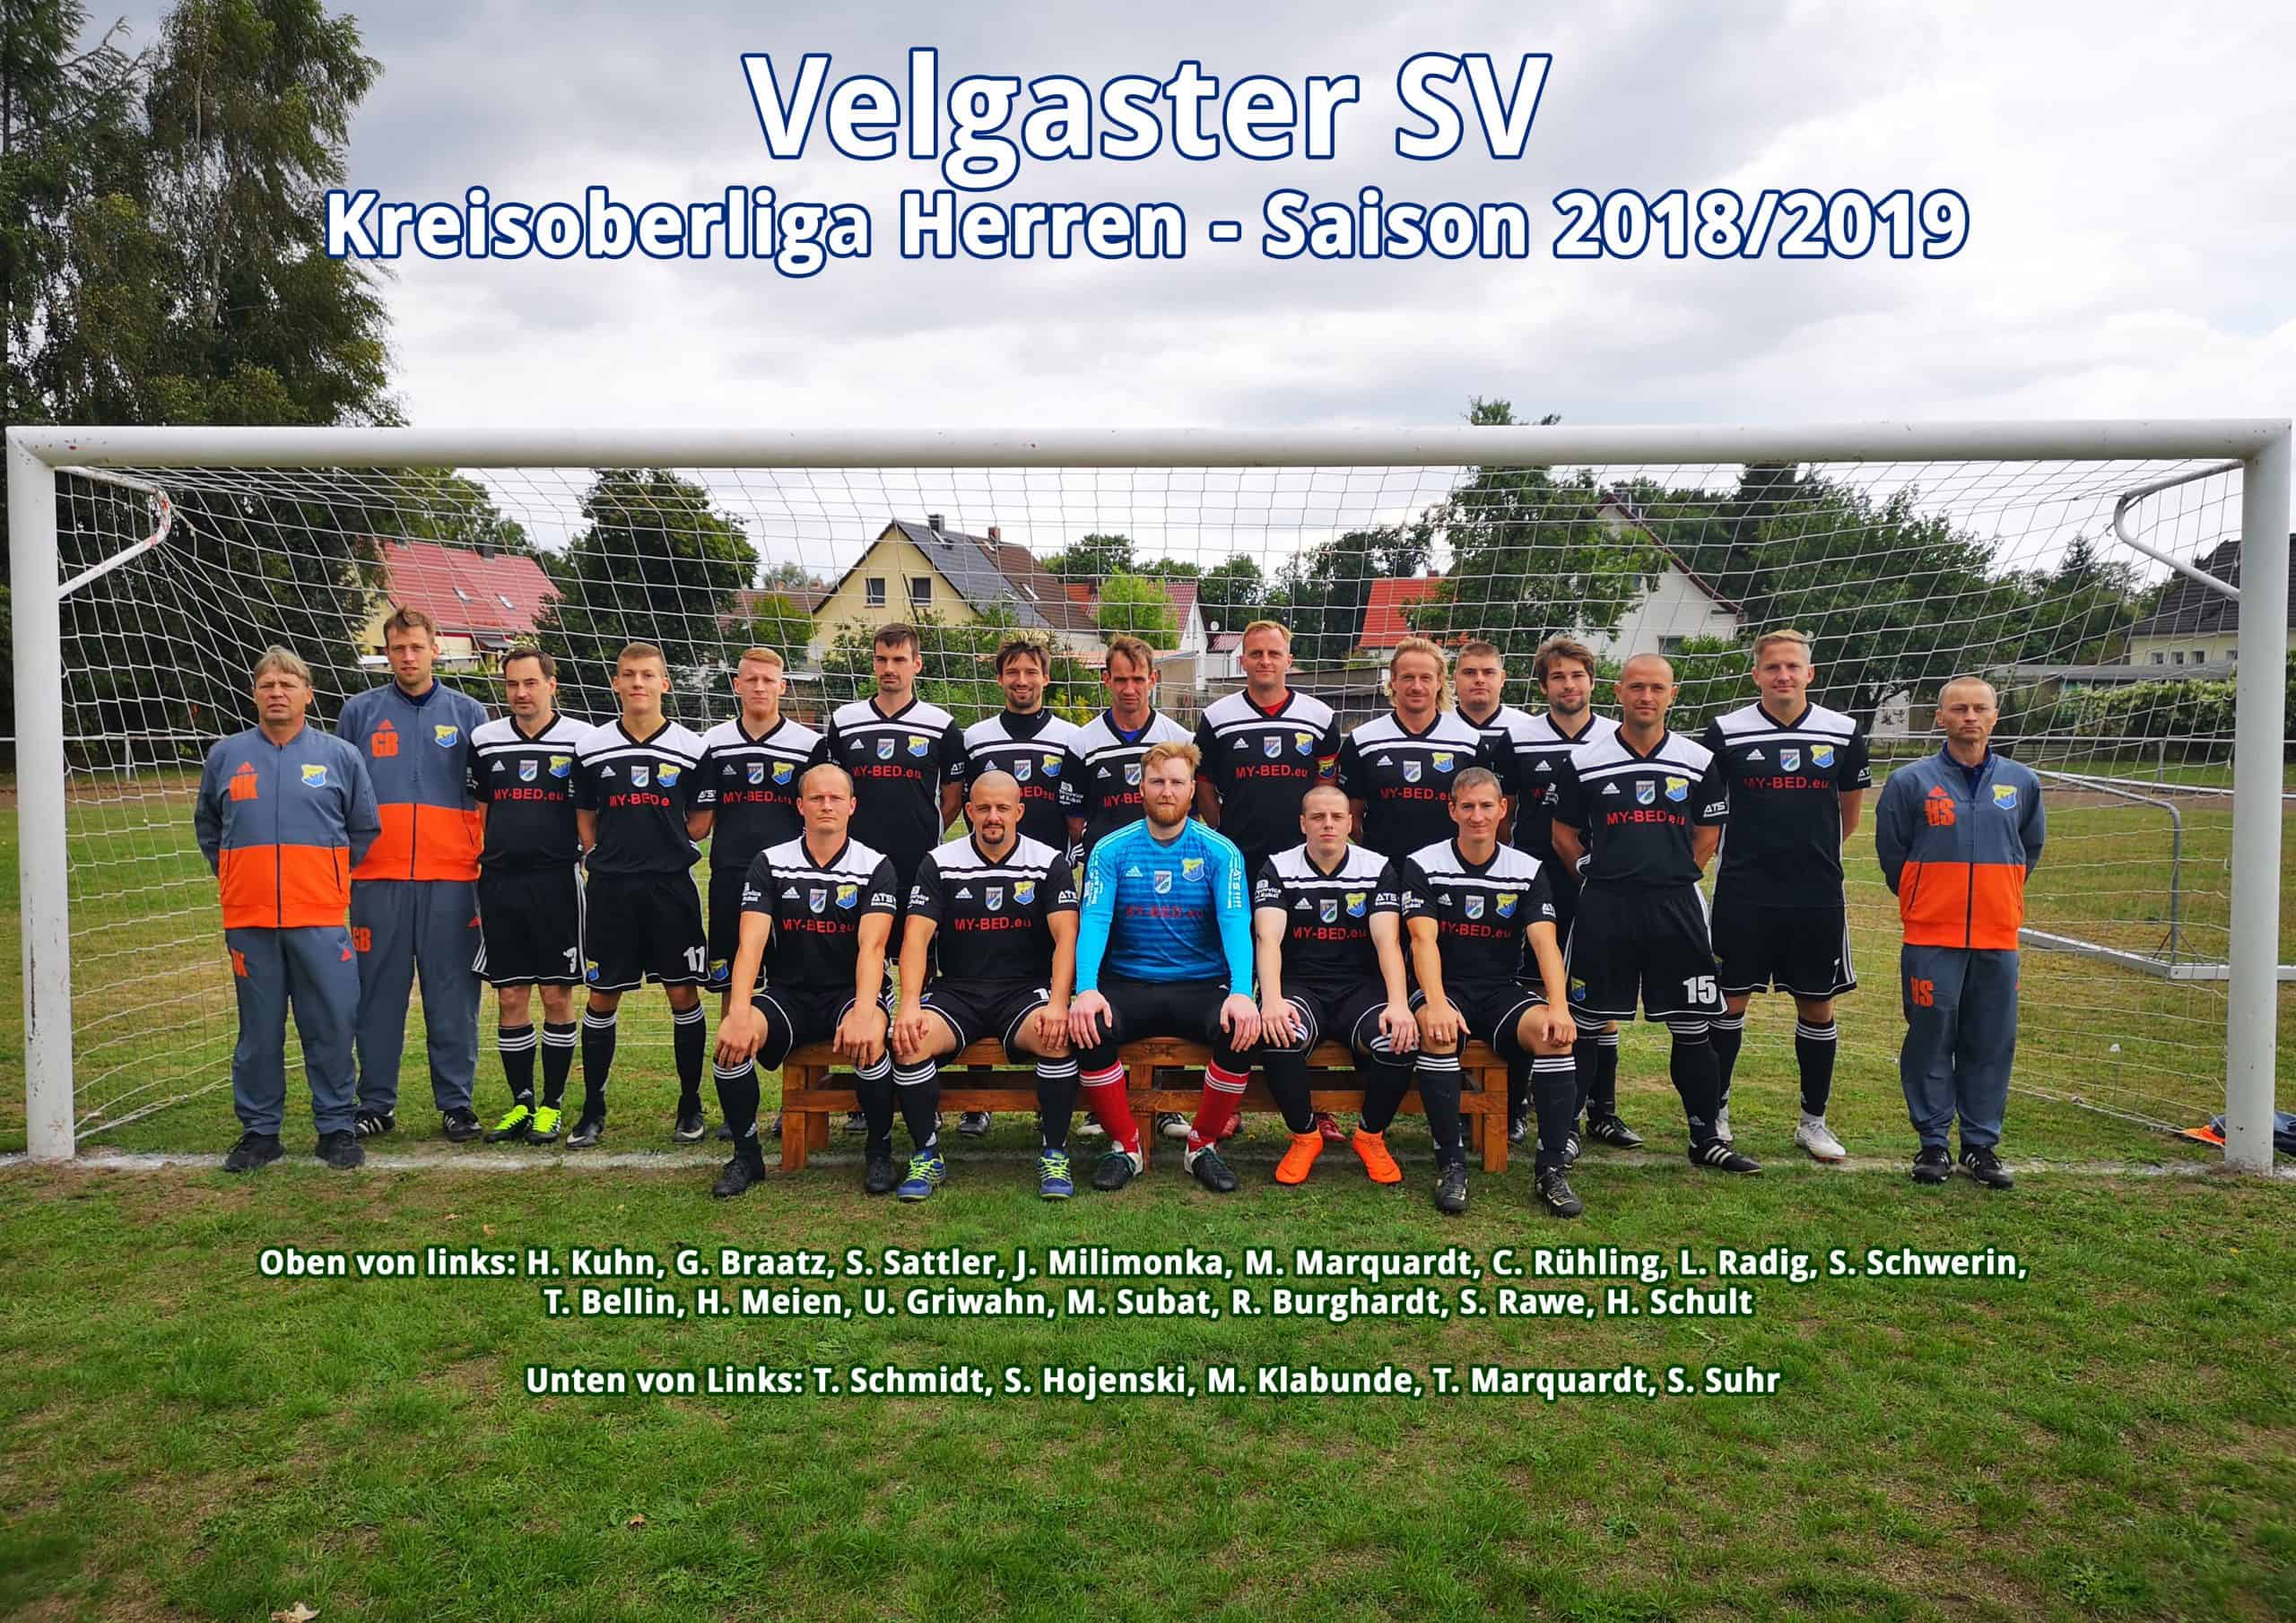 Velgaster SV - VSV 2018 2019 scaled